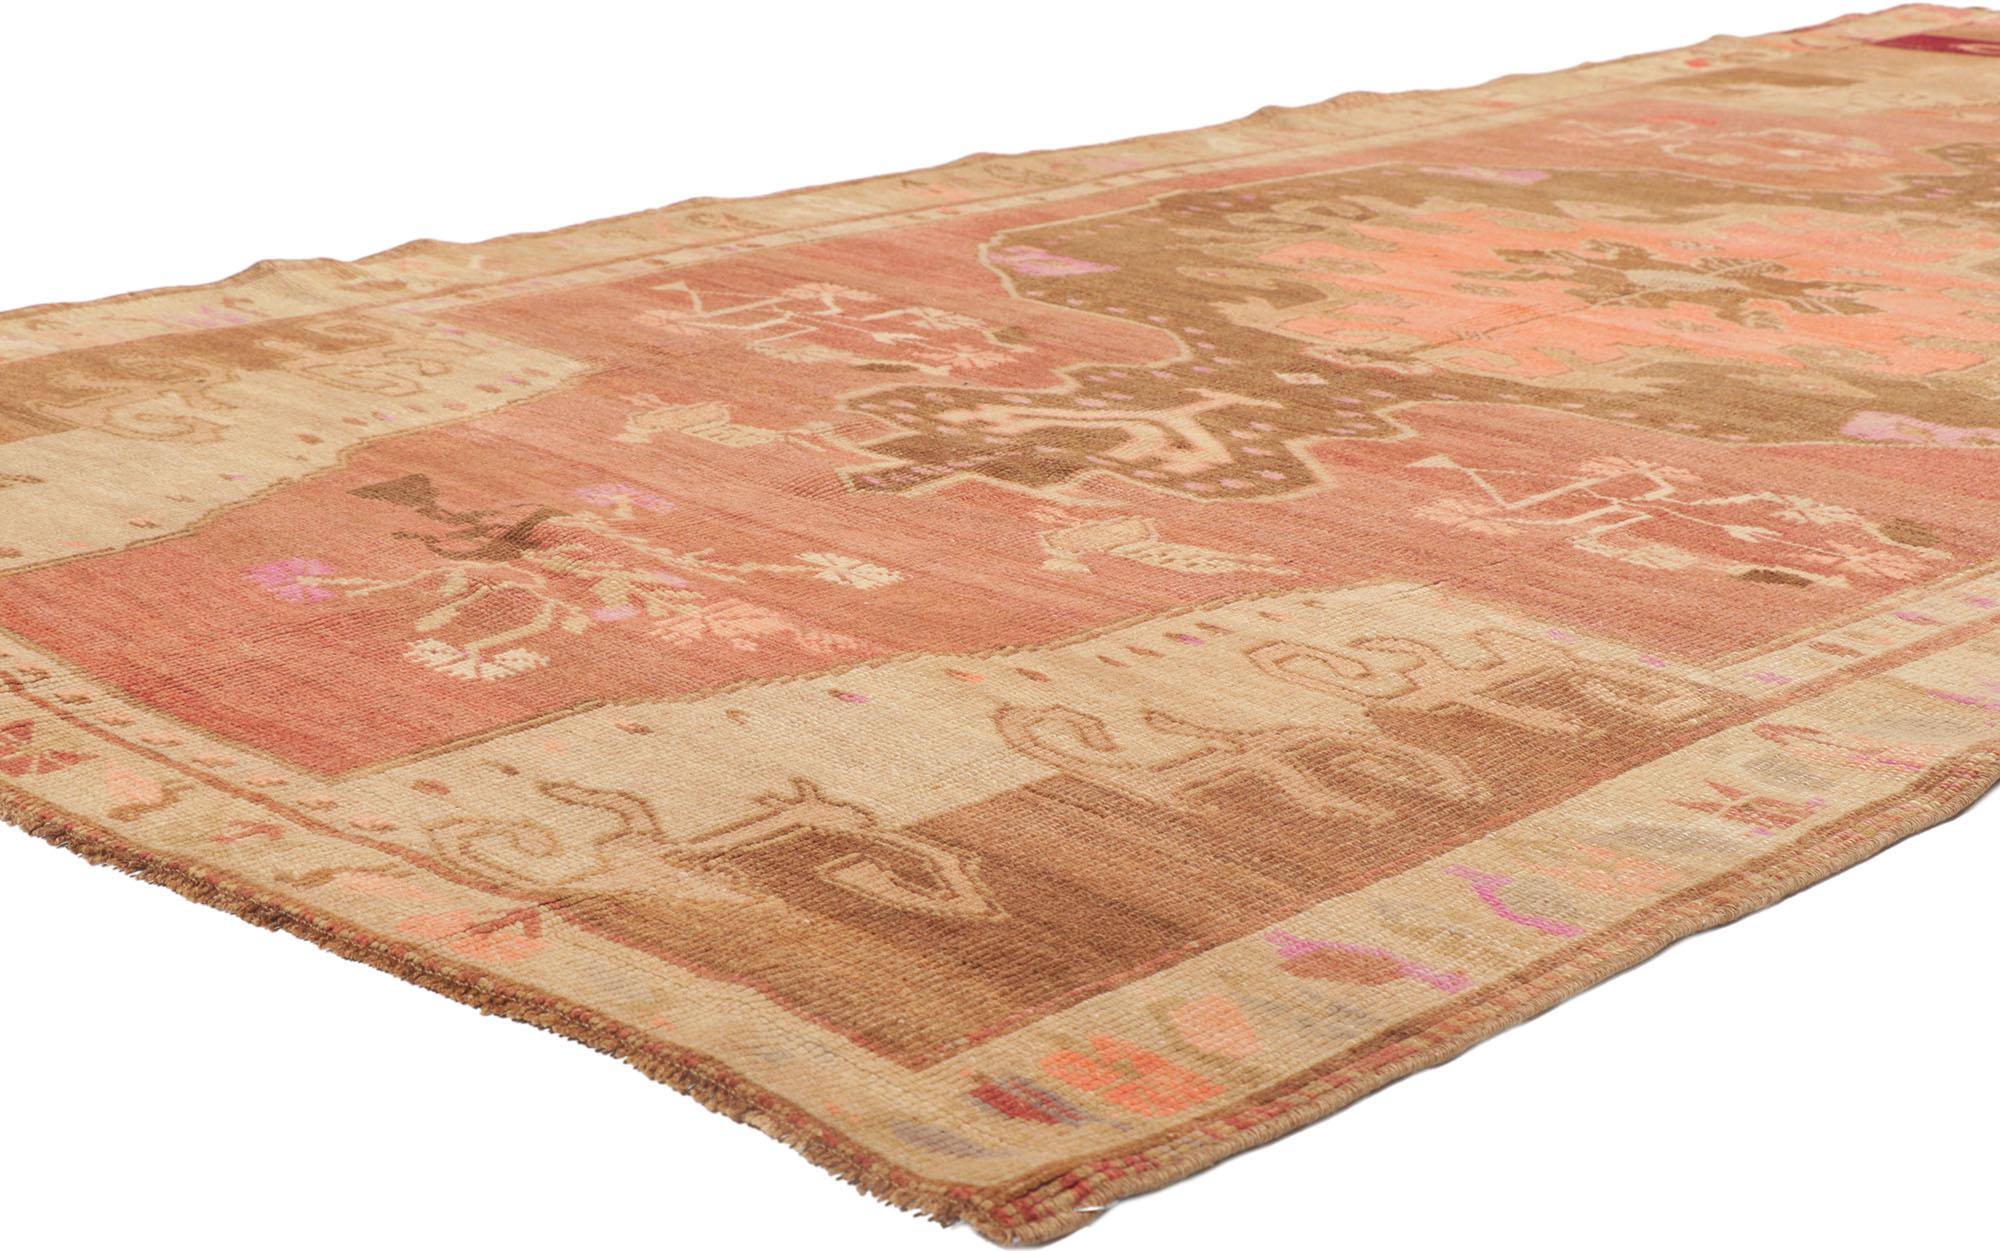 53699 Vintage Turkish kars gallery rug. Measures:  5'06 x 11'04.
Abrash. Antique wash. Hand-knotted wool. Made in Turkey.